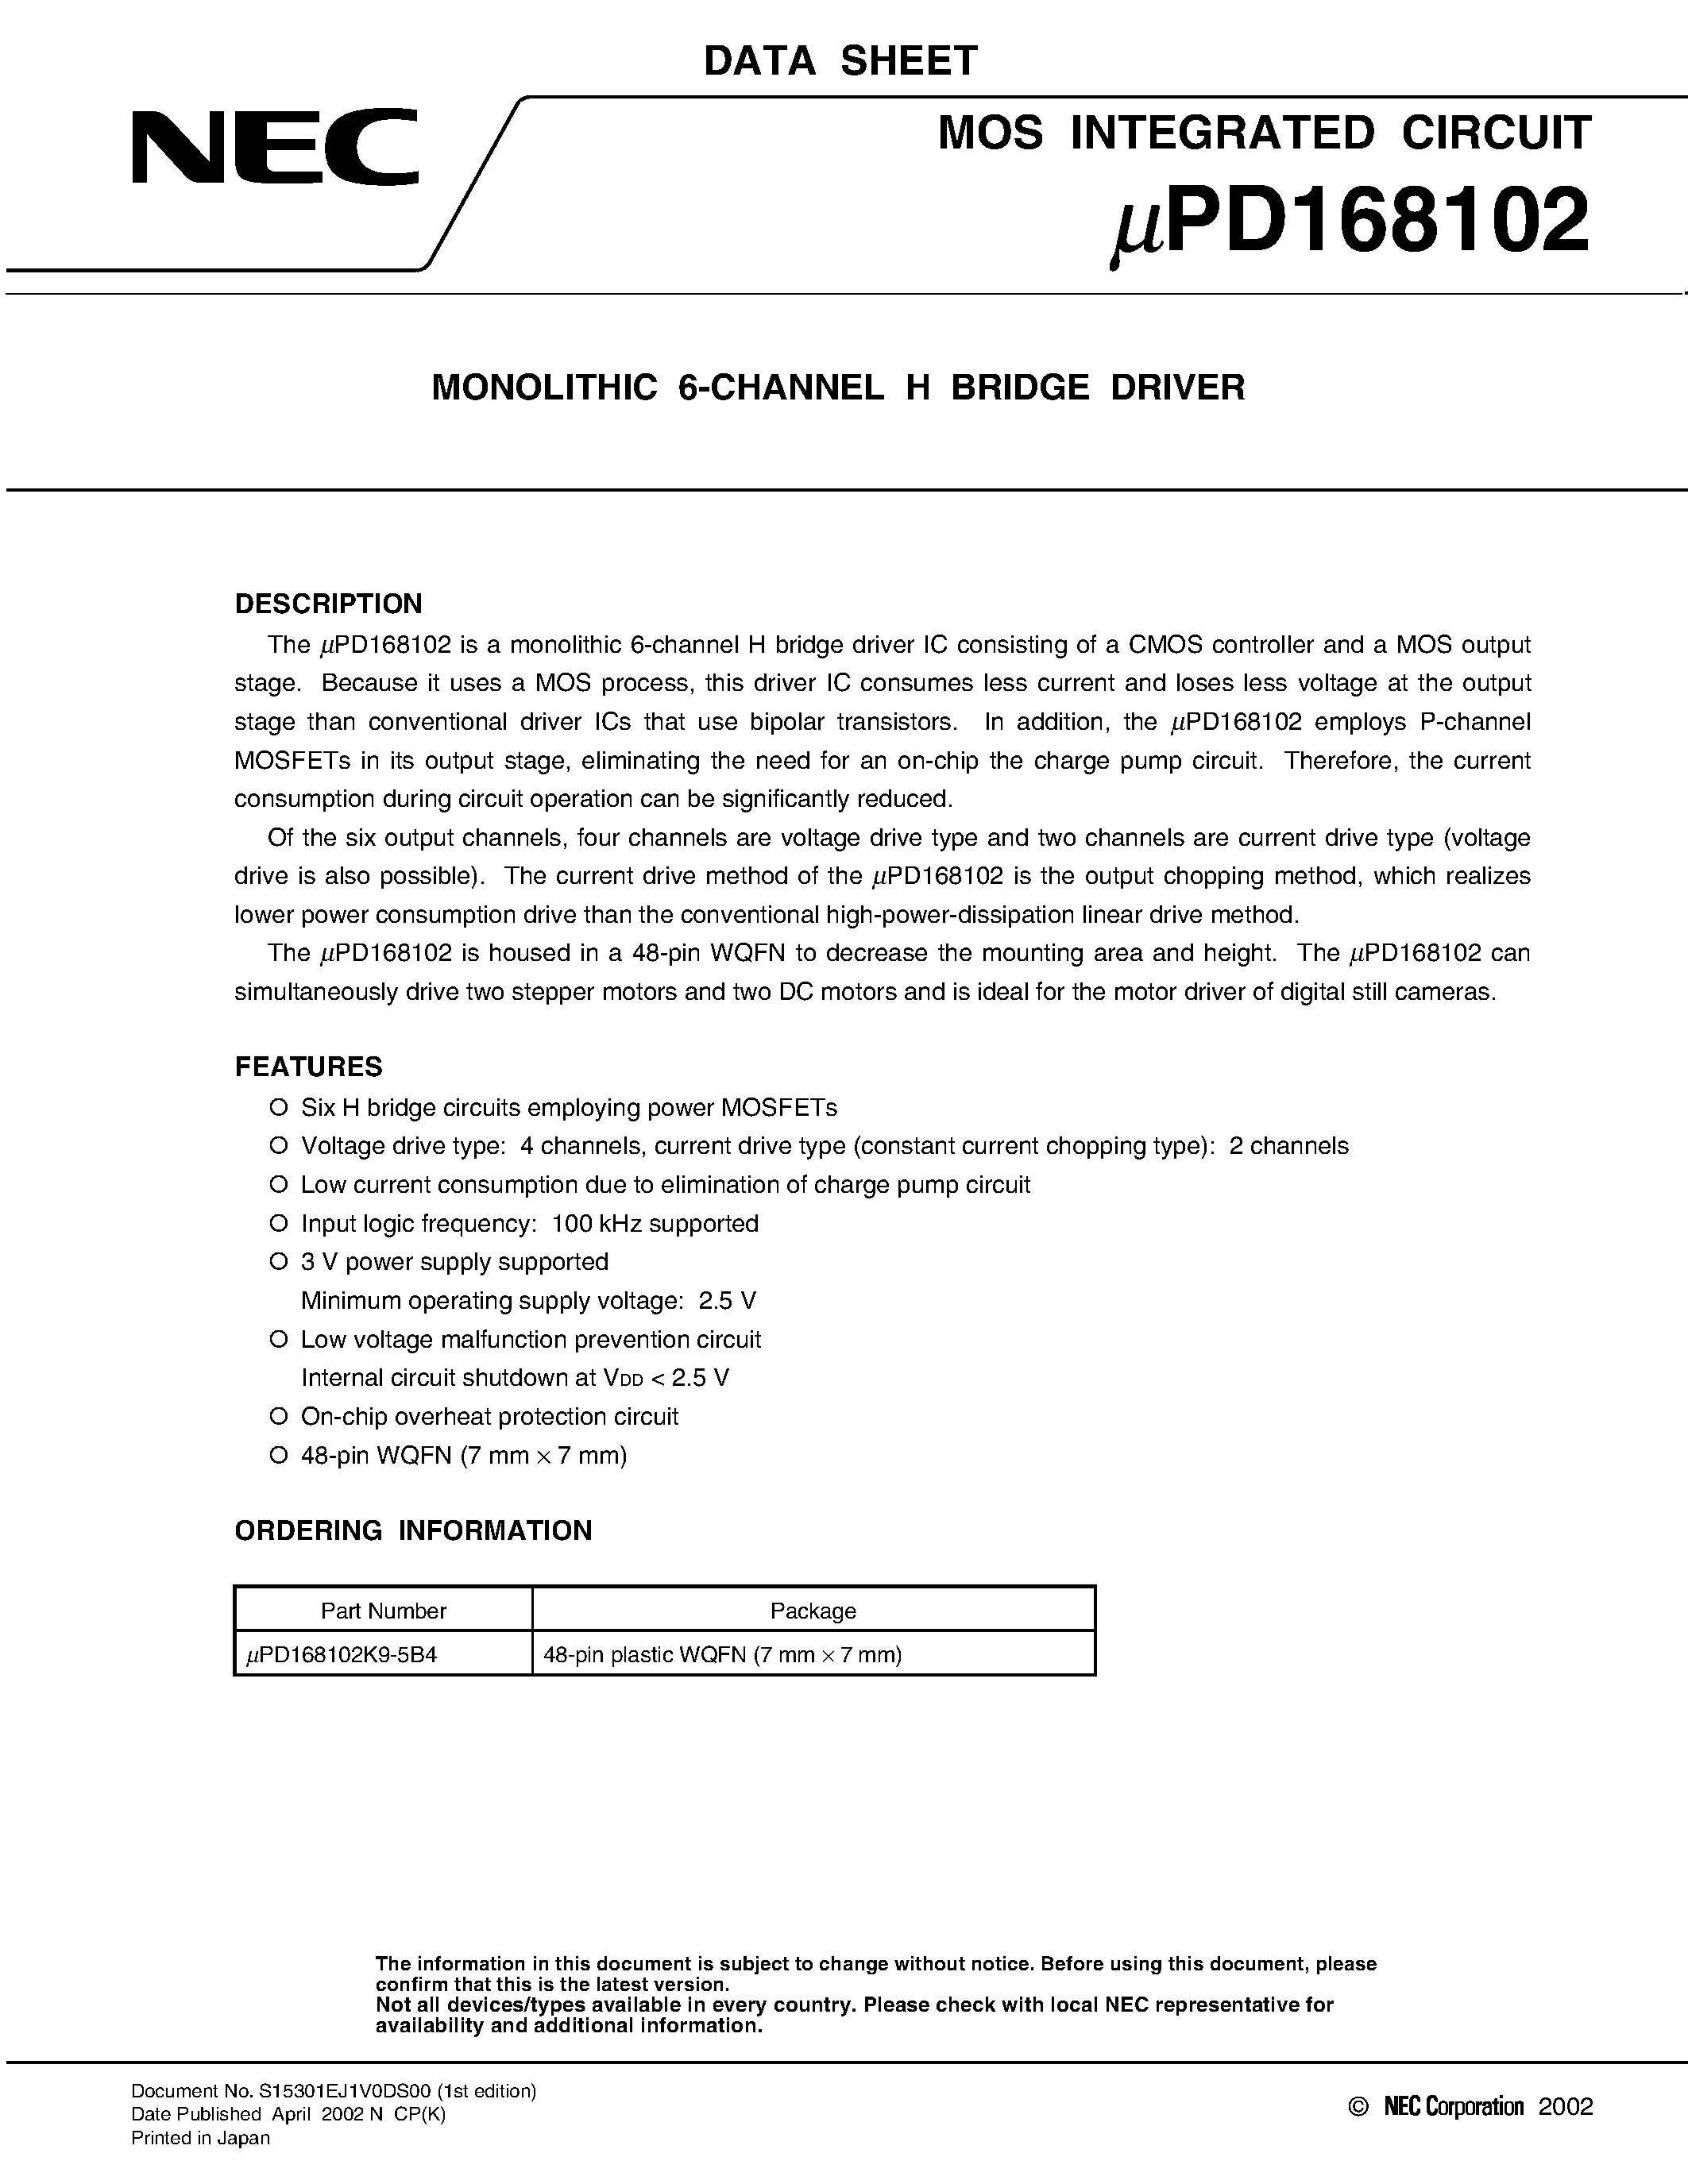 Datasheet UPD168102 - MONOLITHIC 6-CHANNEL H BRIDGE DRIVER page 1